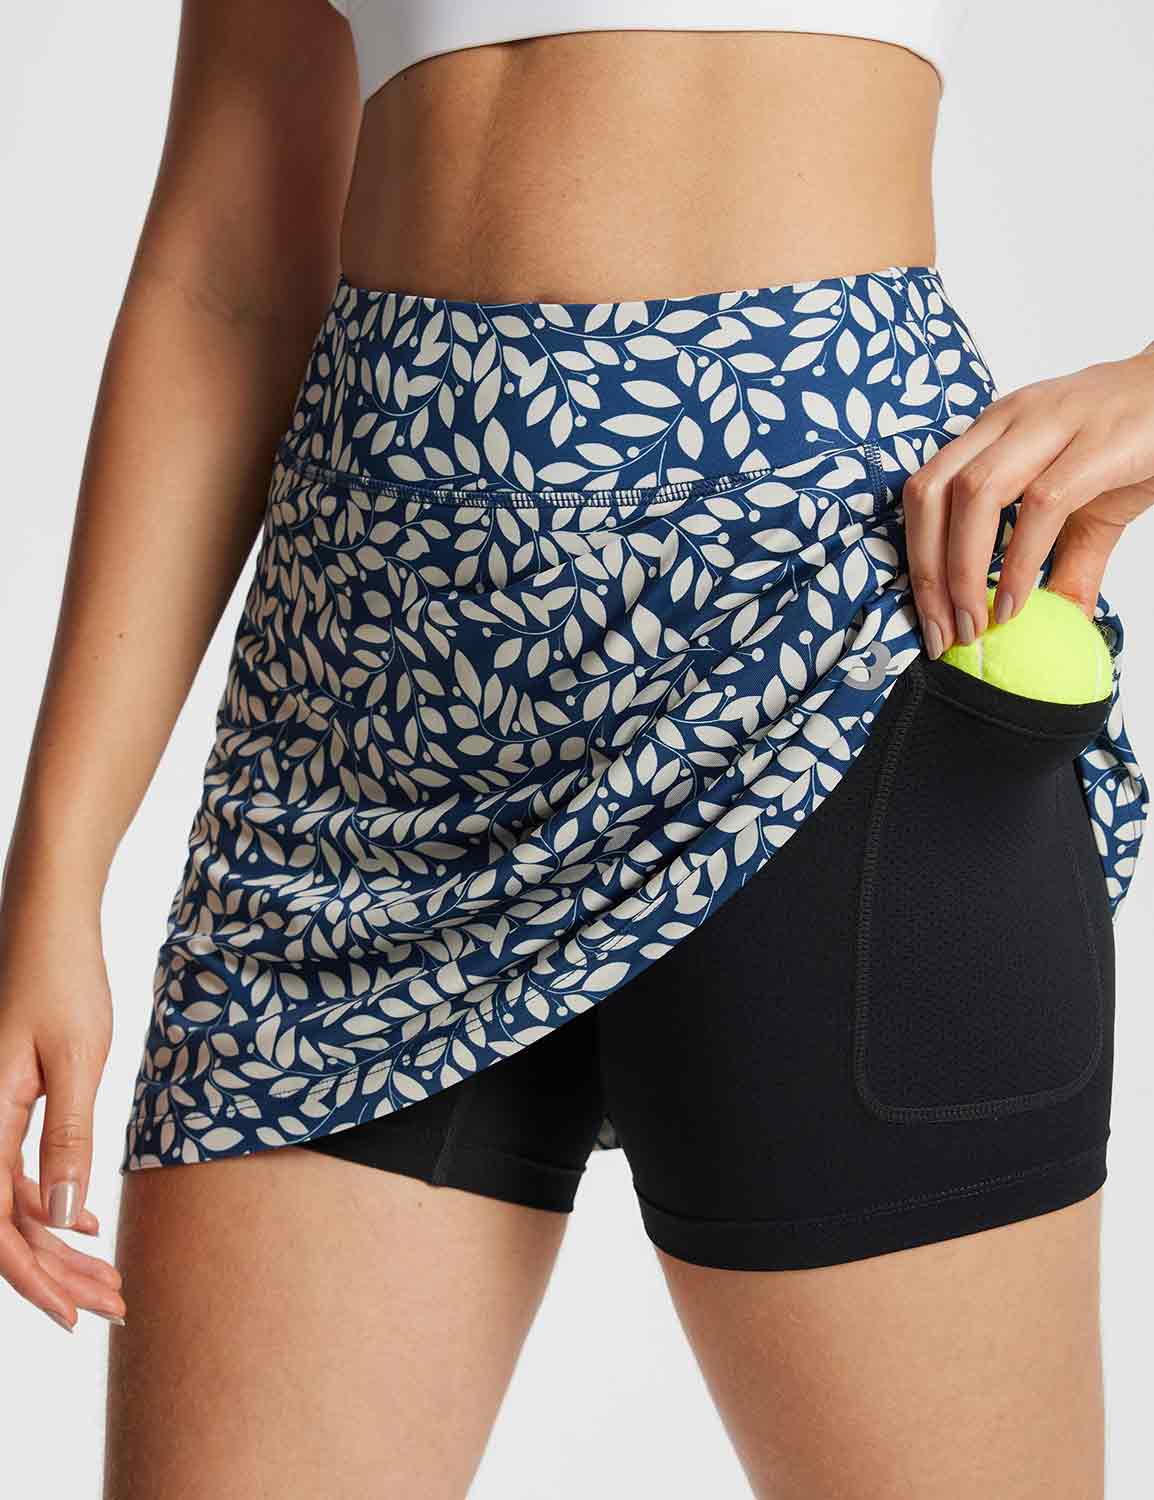 Baleaf Women's Lightweight Pocket Printed Tennis Skort Printed Navy Leaf with Built-in Short